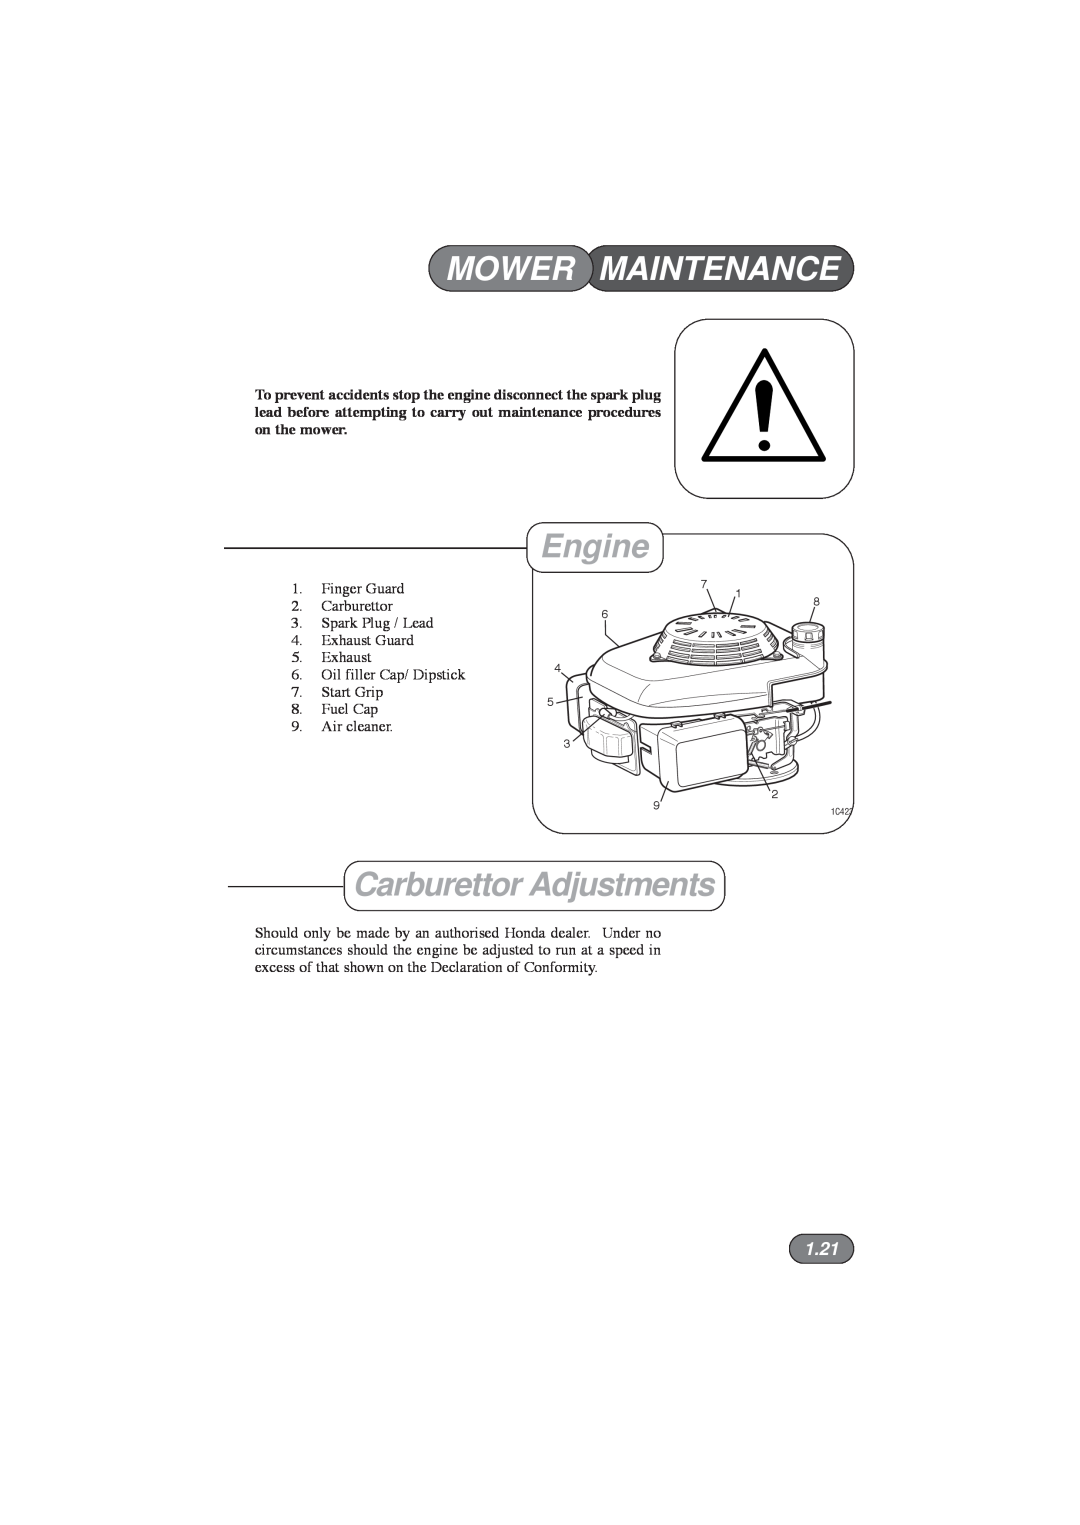 Hayter Mowers 434D, 435D, 433D, 432D manual Mower Maintenance, Engine, Carburettor Adjustments, 1.21 